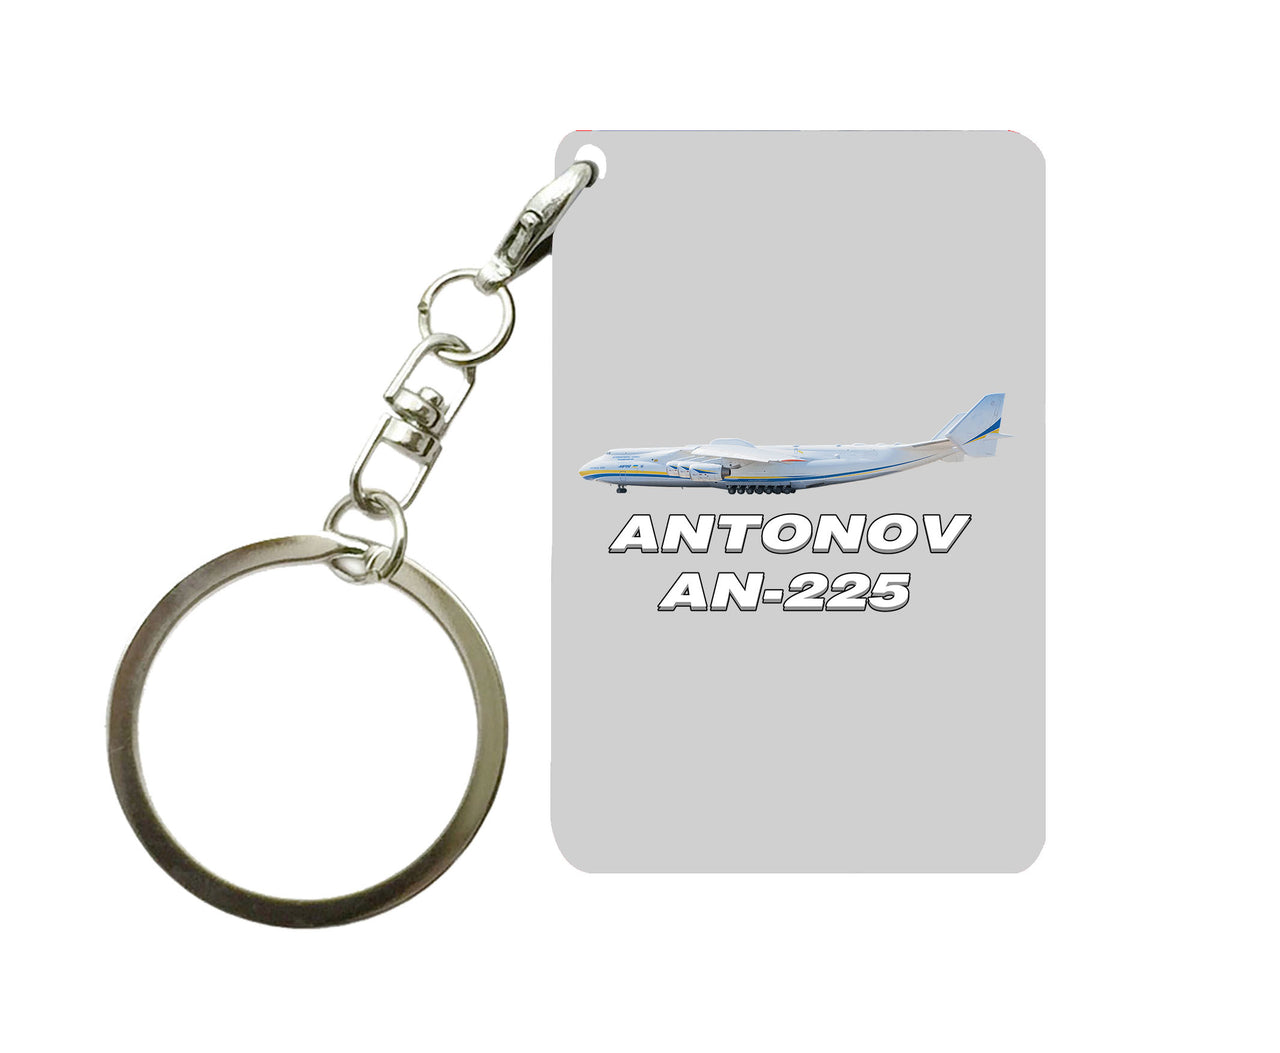 The Antonov AN-225 Designed Key Chains